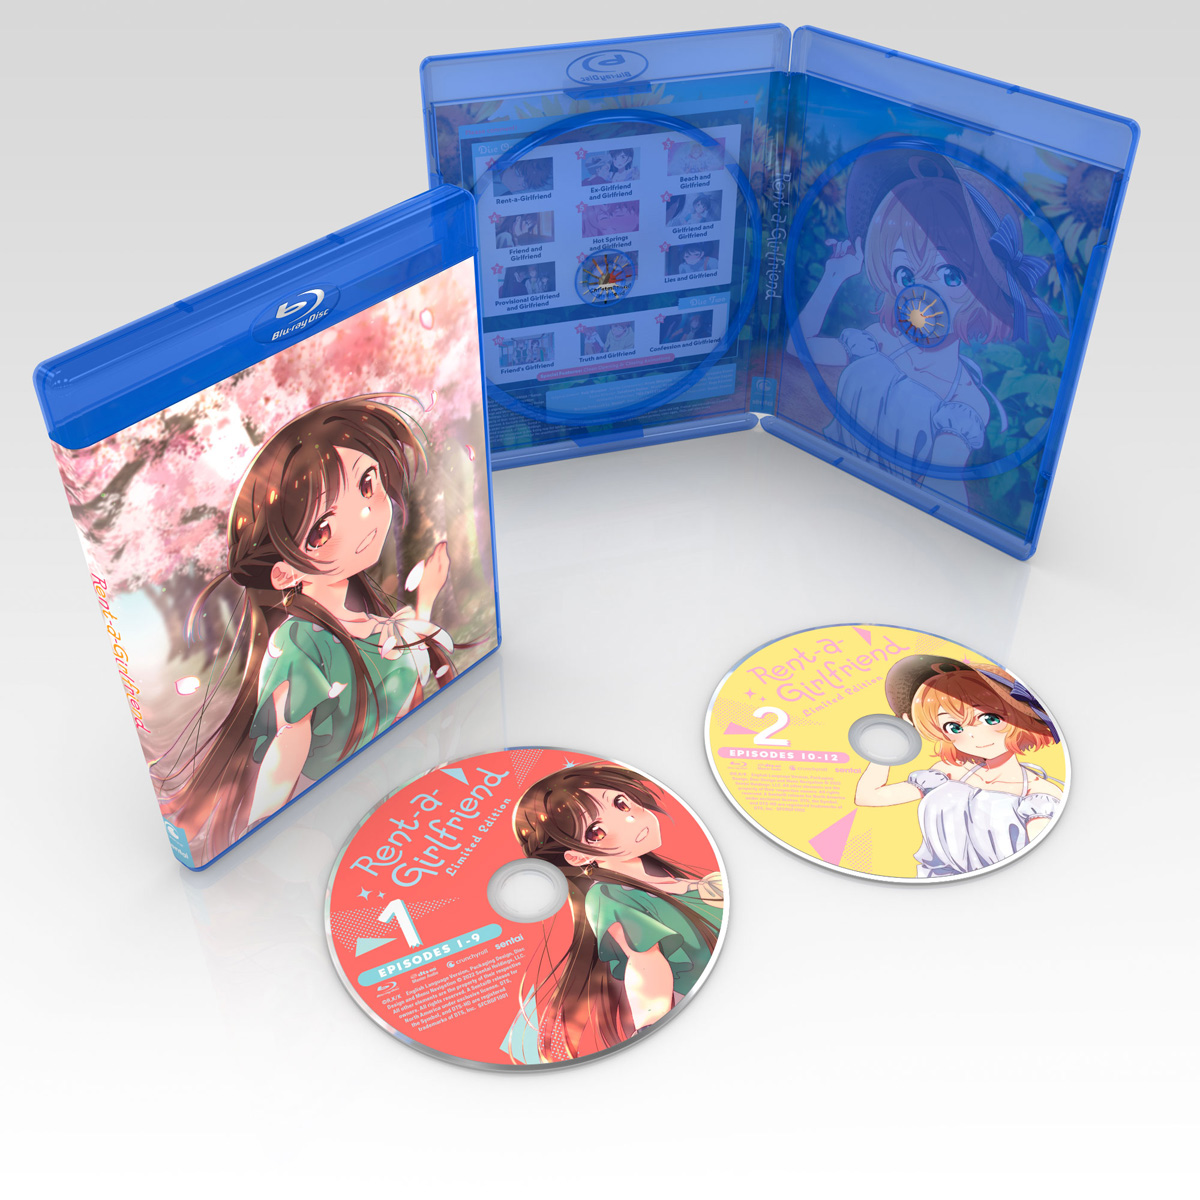 Rent-A-Girlfriend: Complete Collection Blu-ray (Kanojo, Okarishimasu)